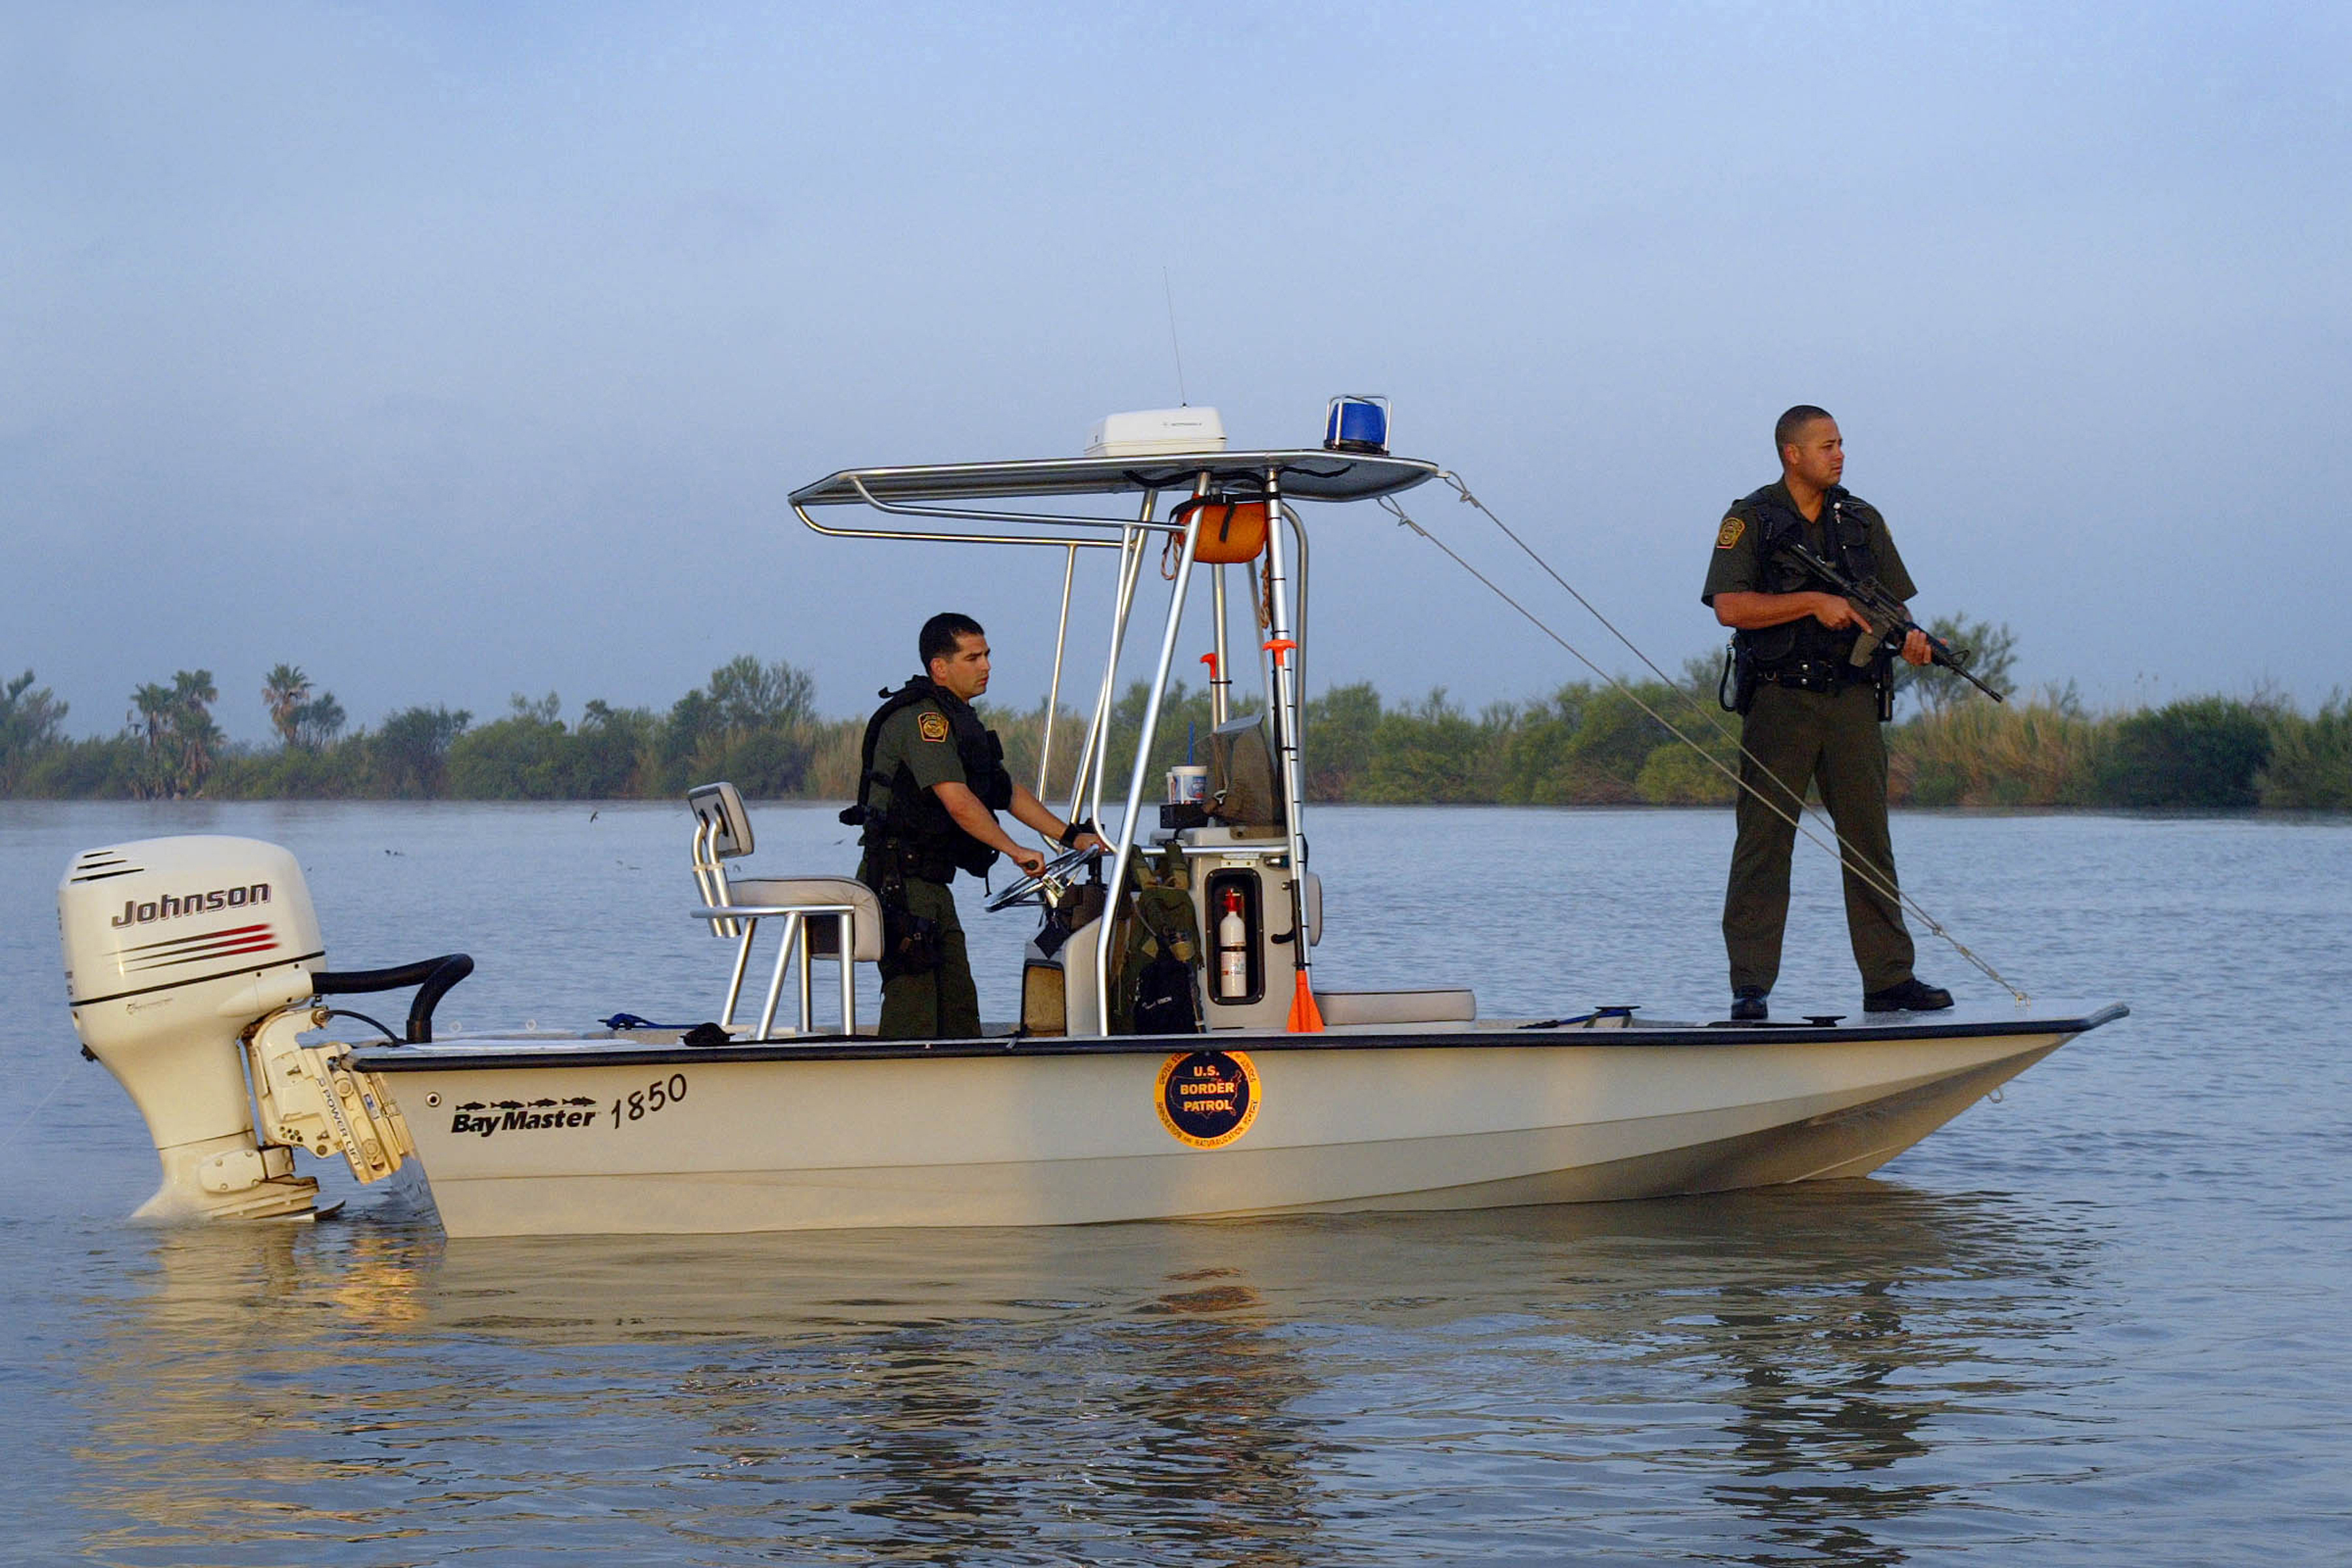 U.S. Border Patrol Marine units patrol the waterways of our Nation's borders.